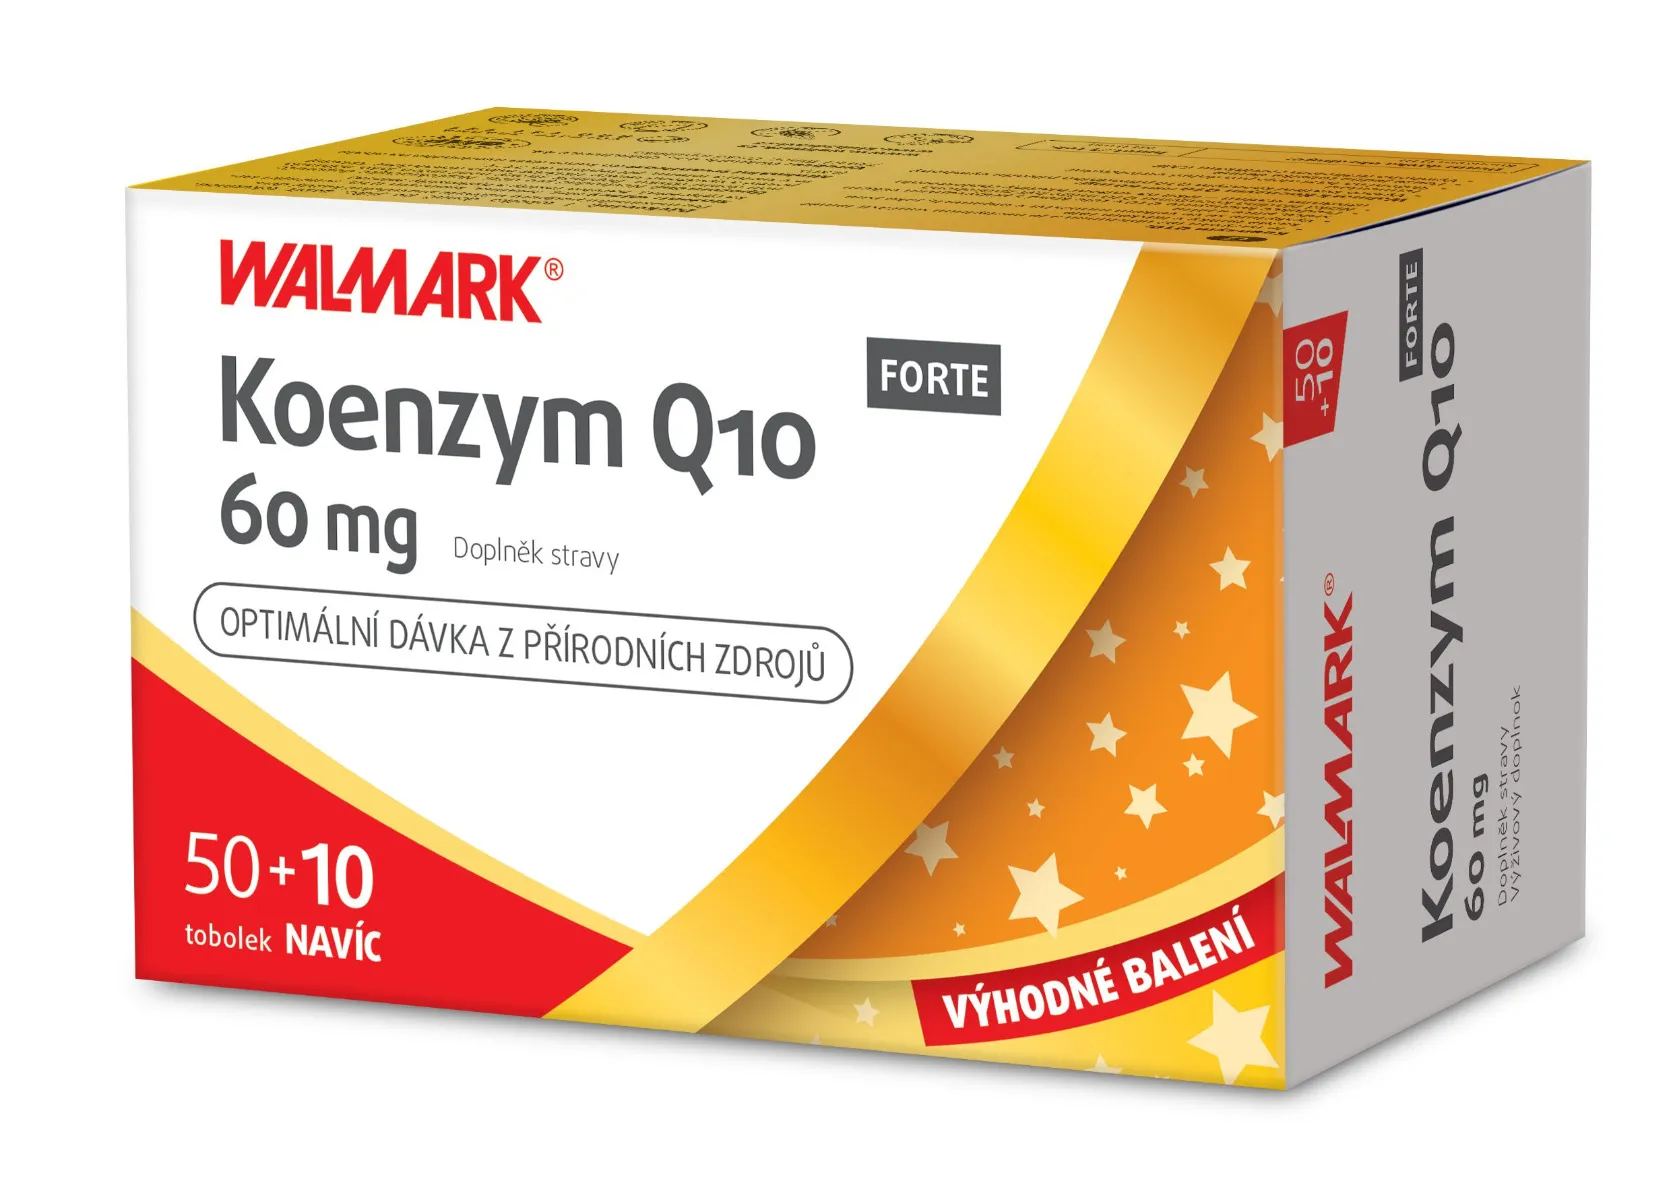 Walmark Koenzym Q10 FORTE 60 mg 50+10 tobolek